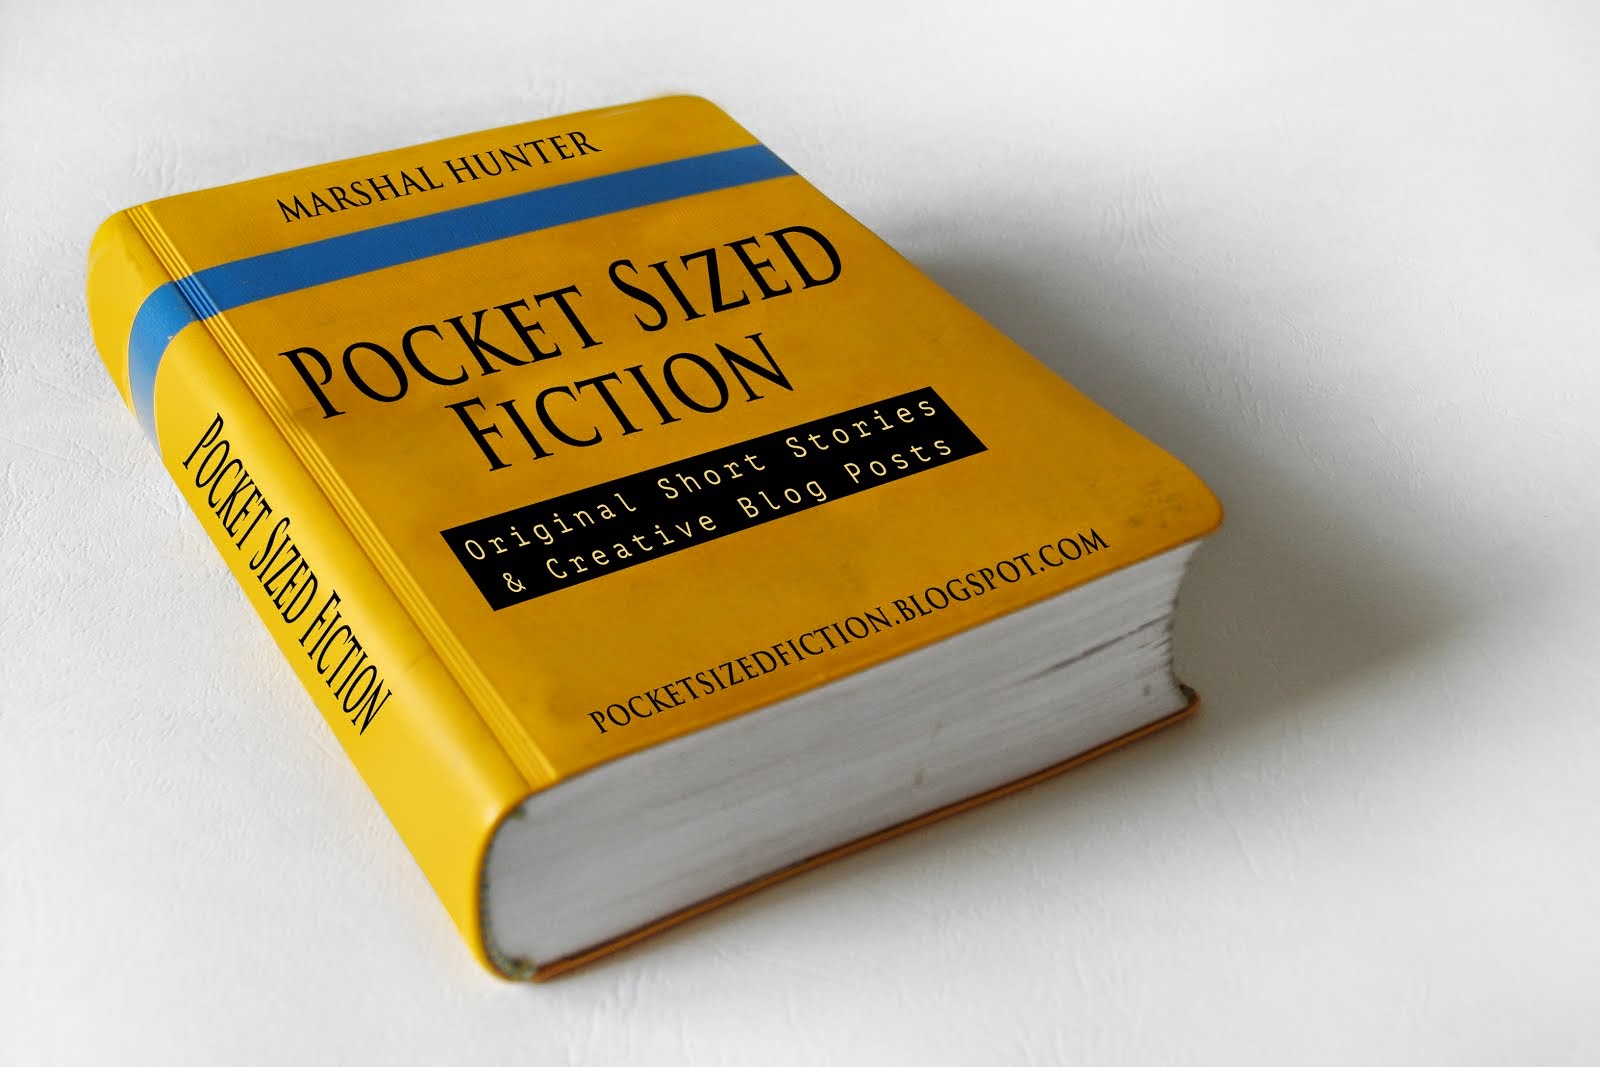 Pocket Sized Fiction